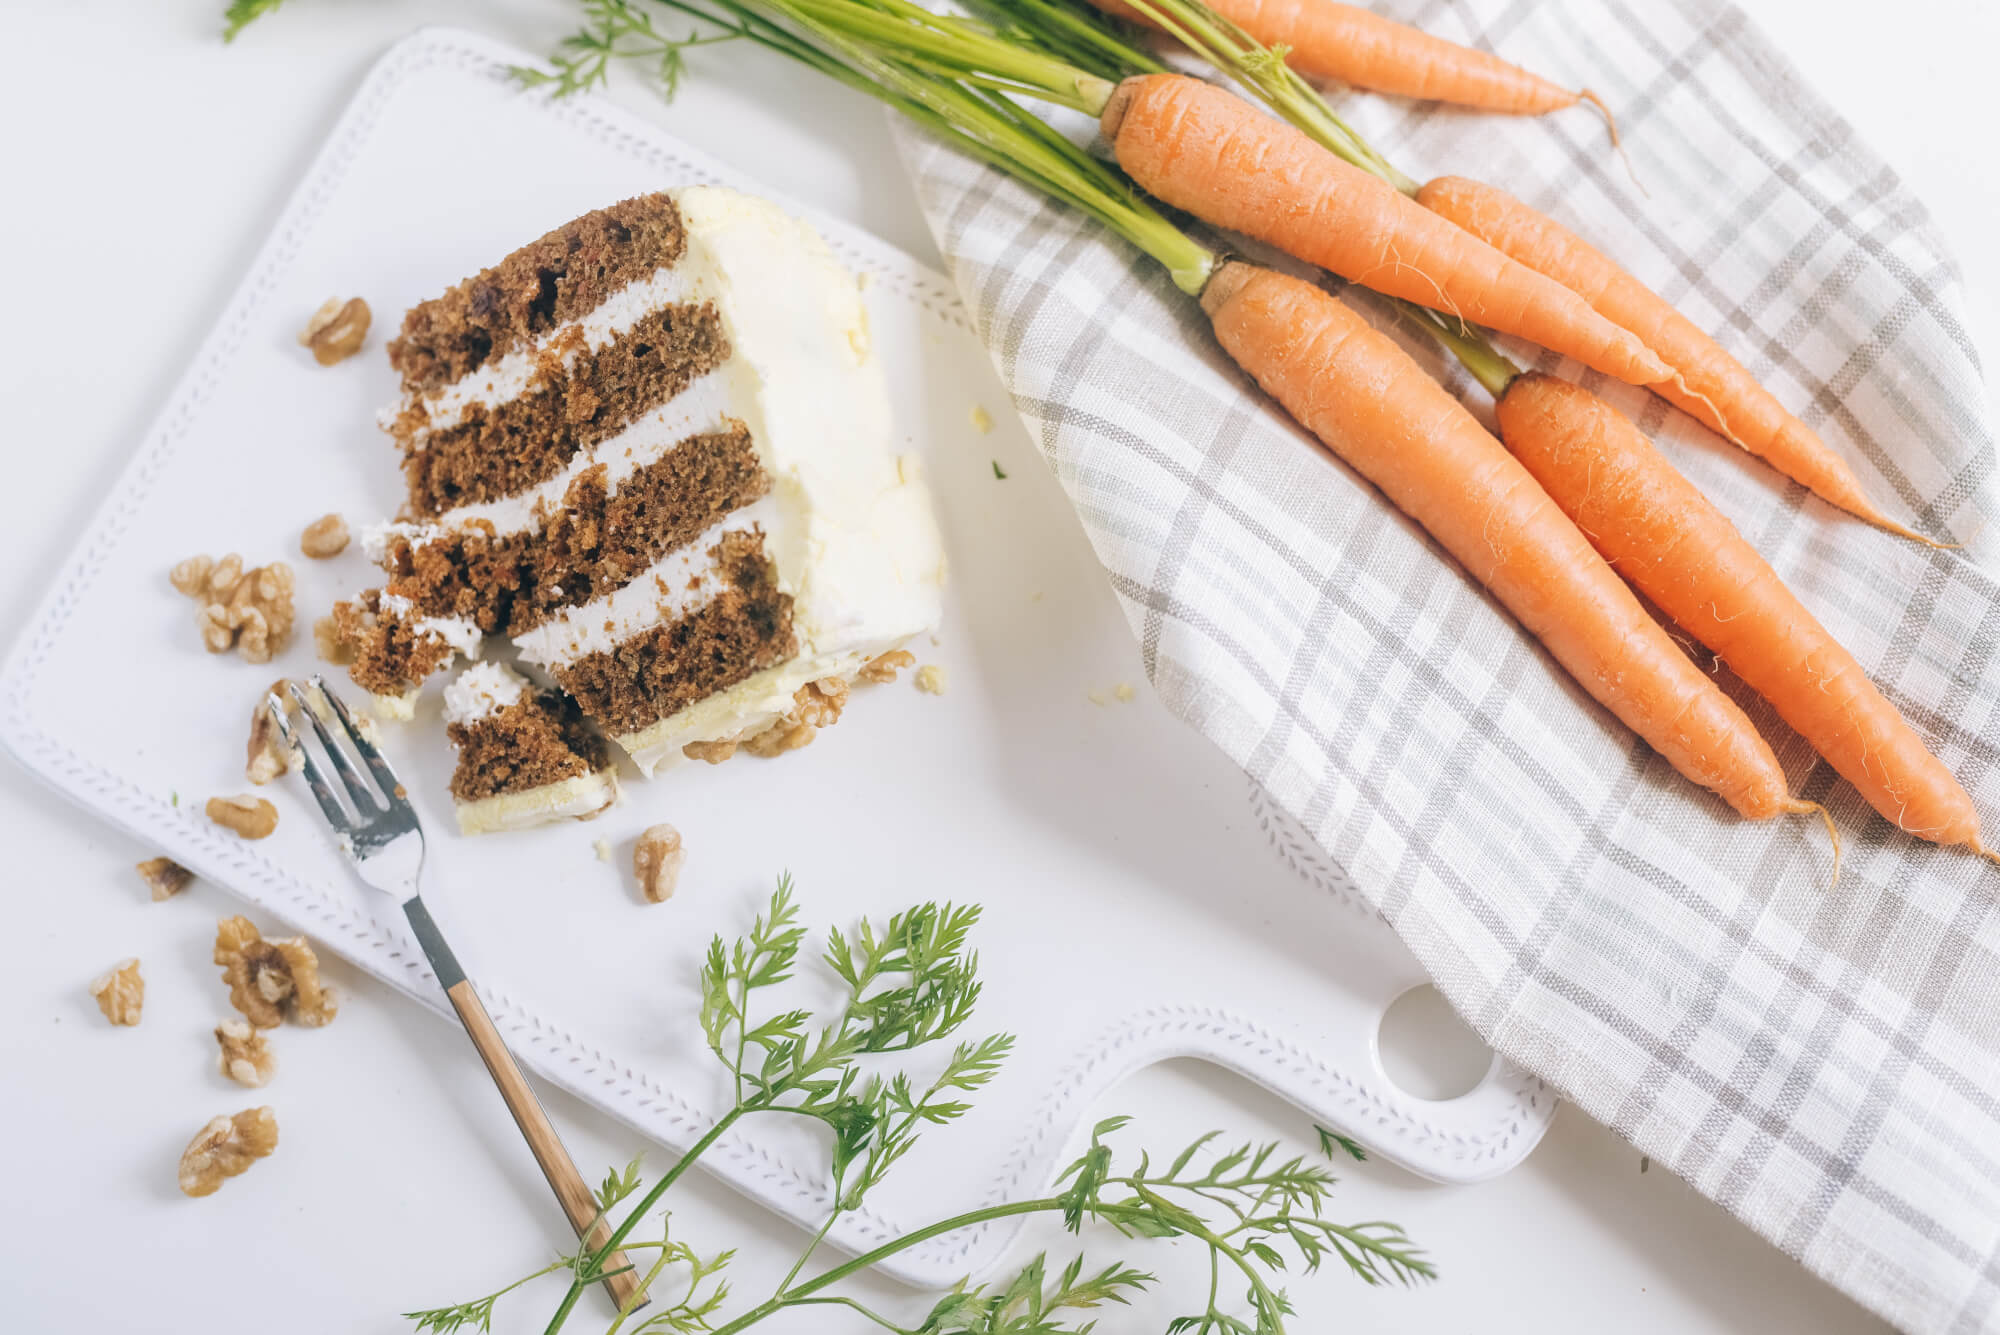 Our zero waste carrot cake recipe